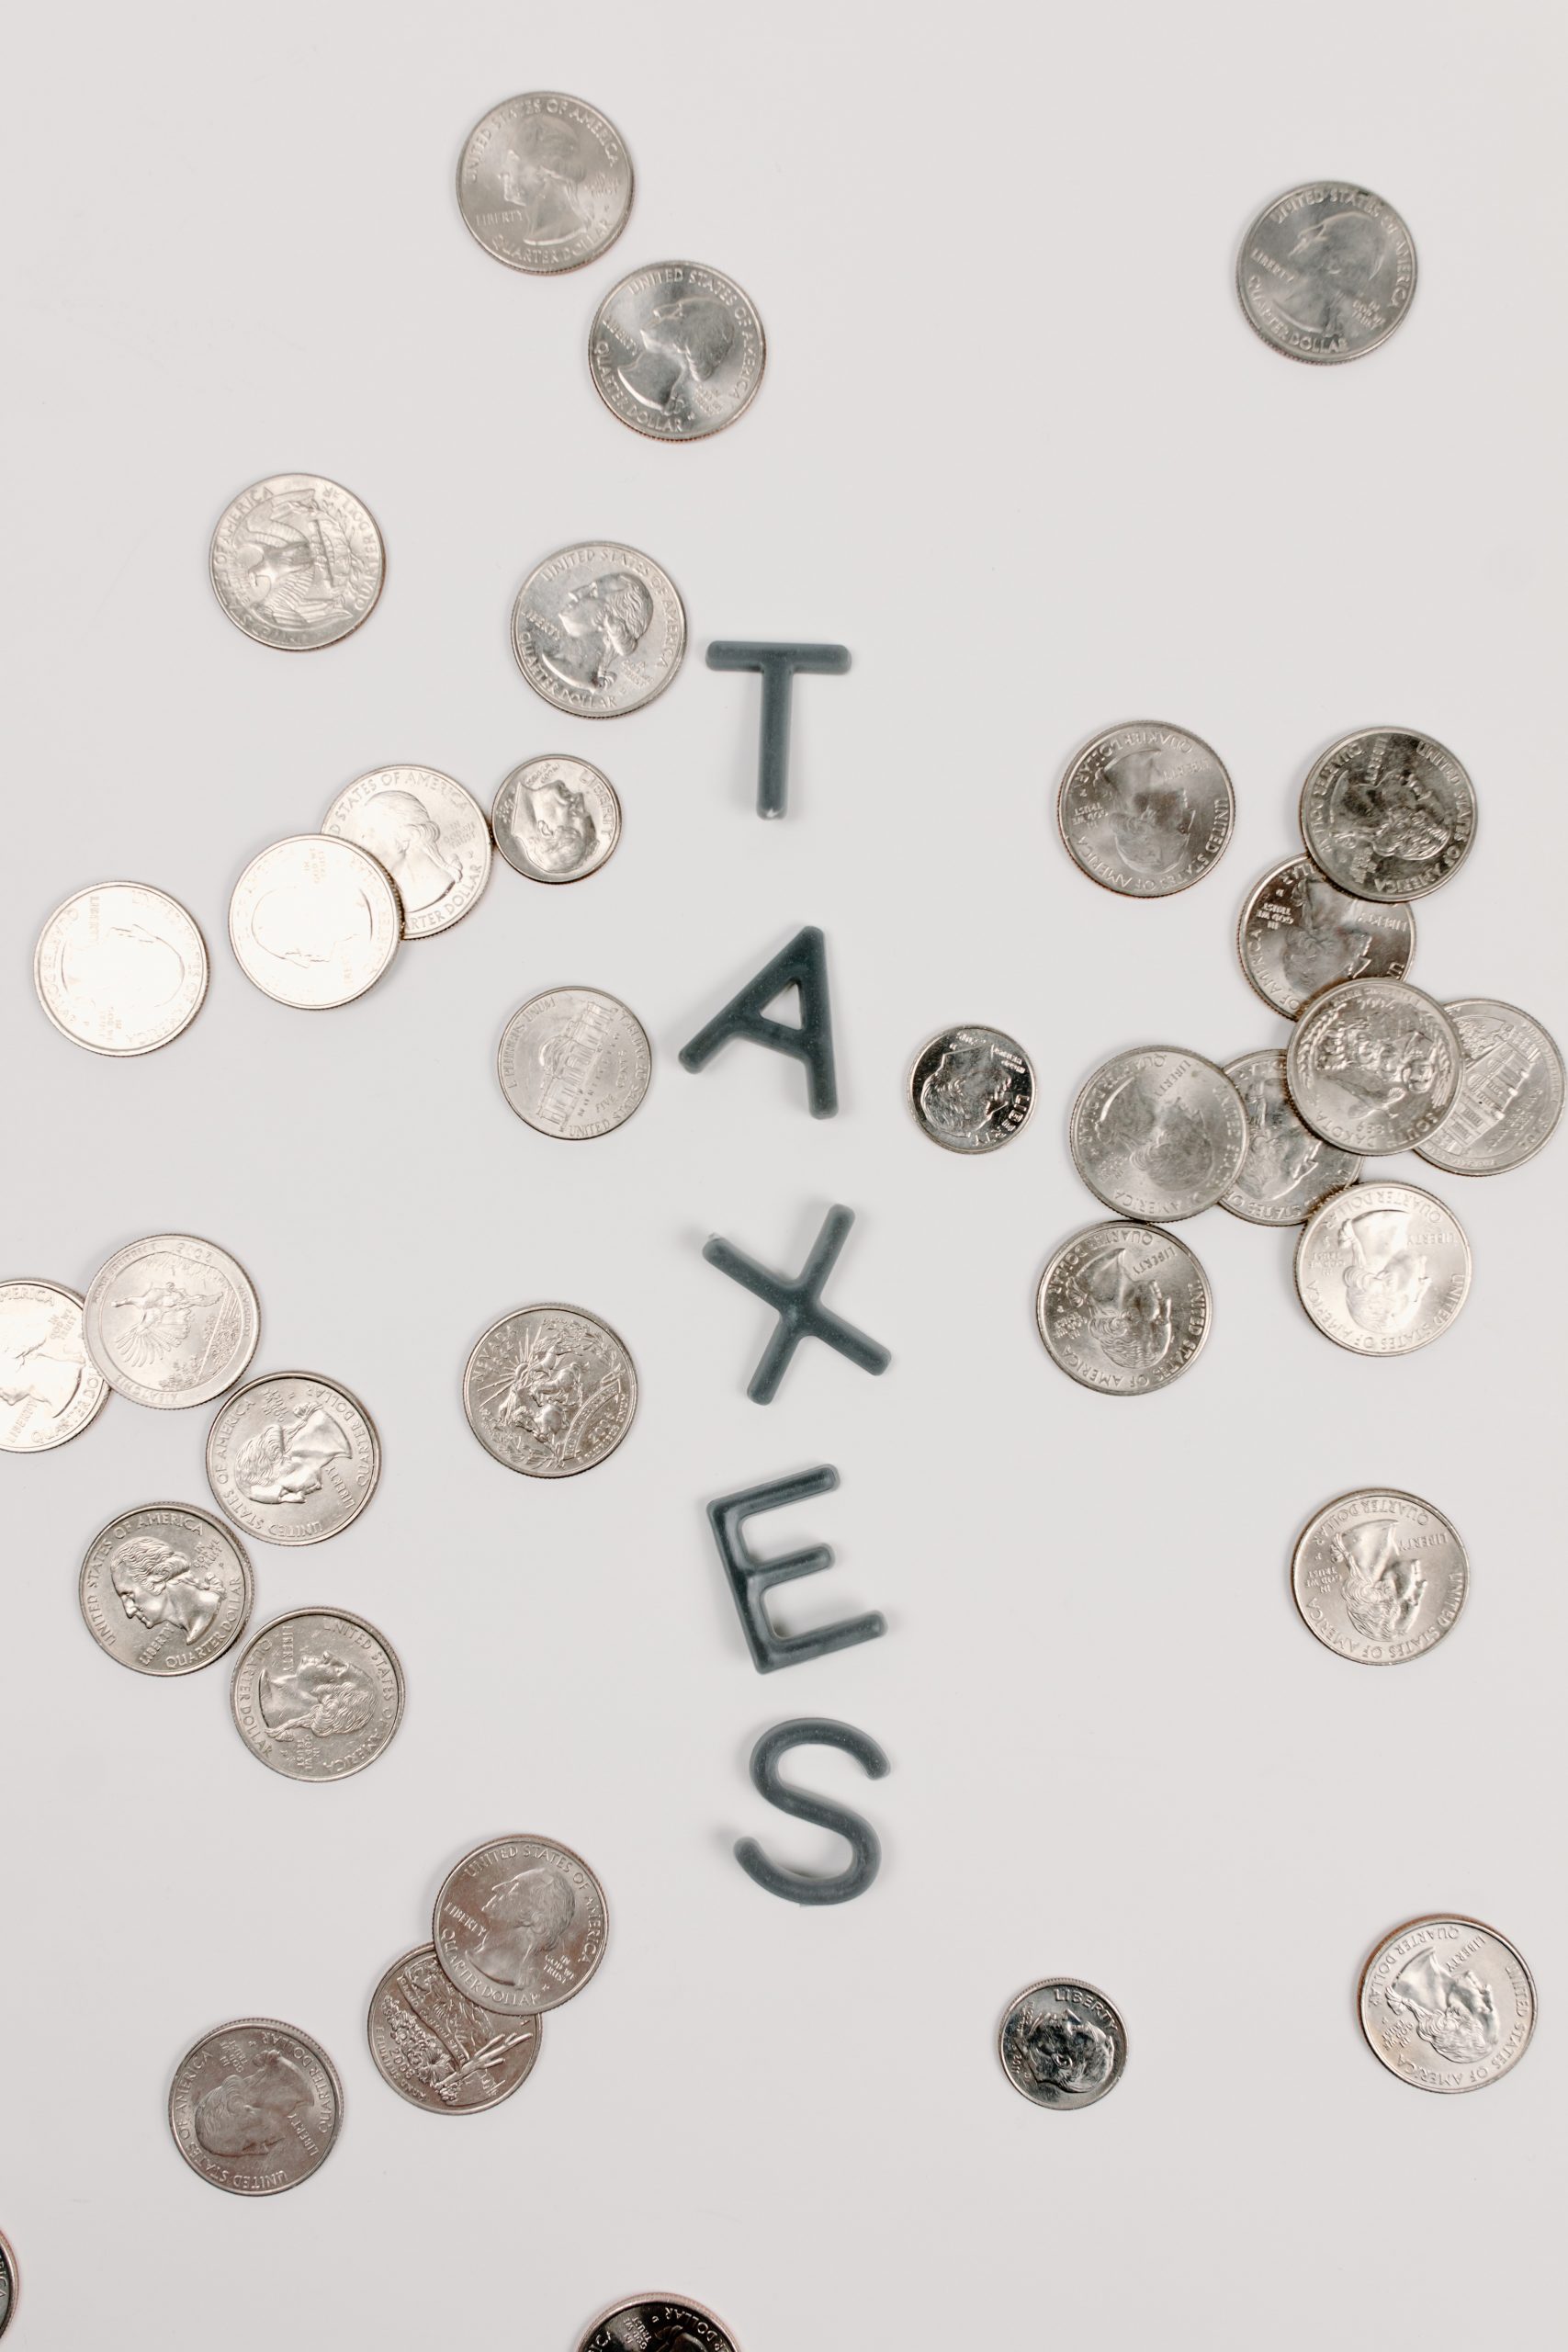 sui taxes increasing